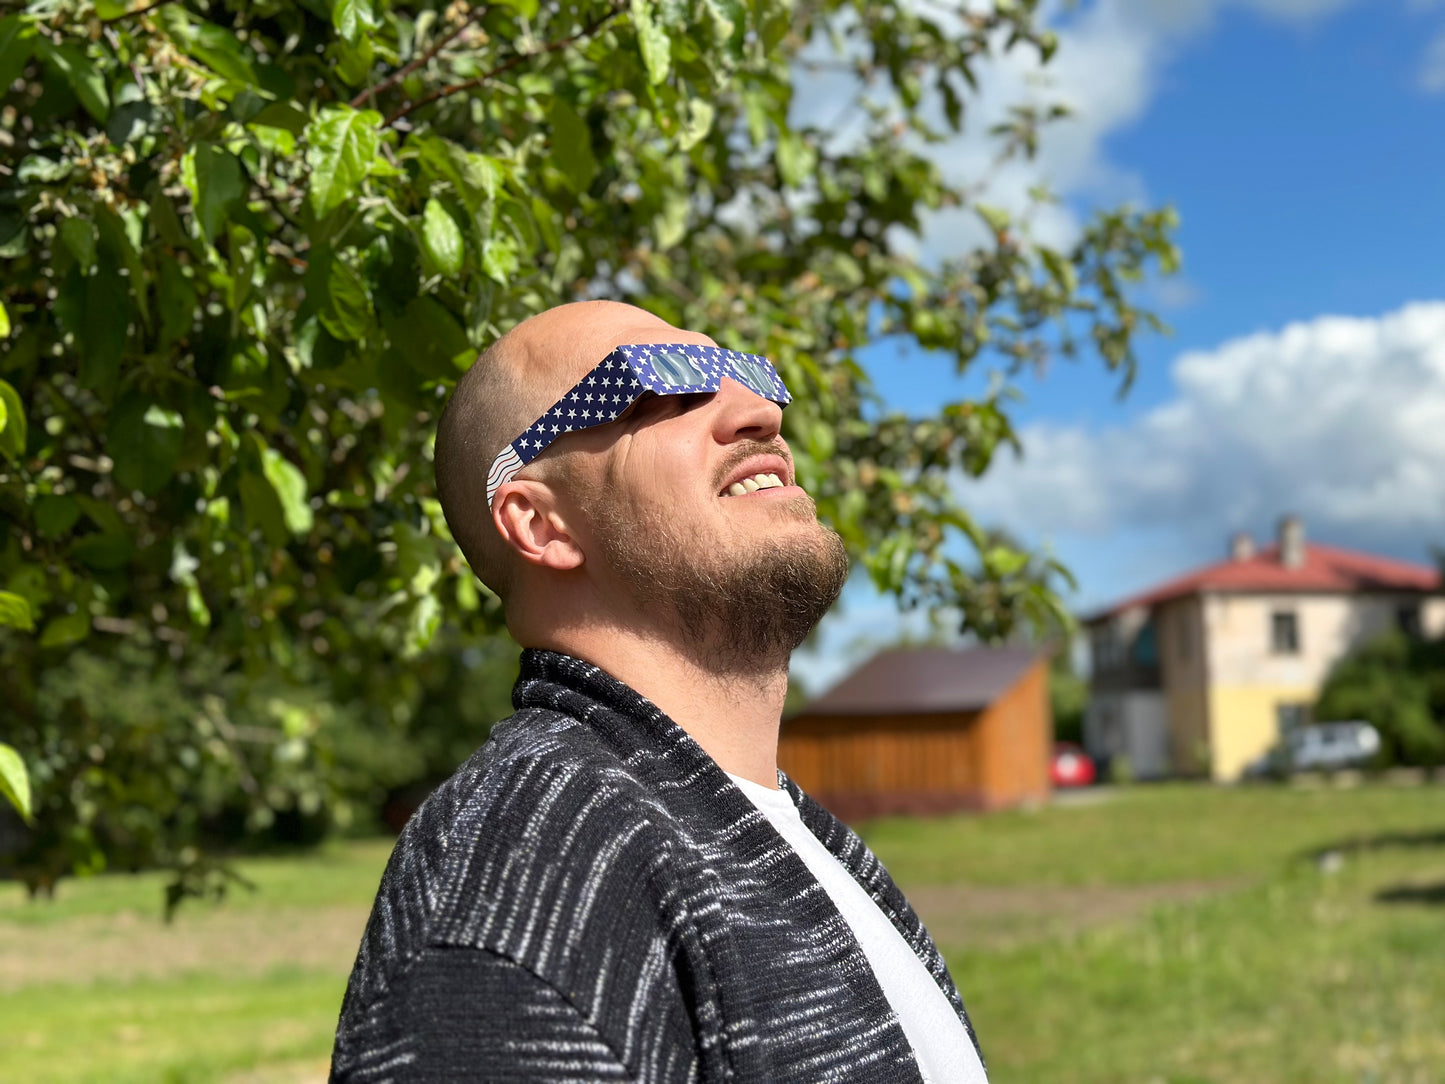 Solar Eclipse Glasses - USA Patriotic